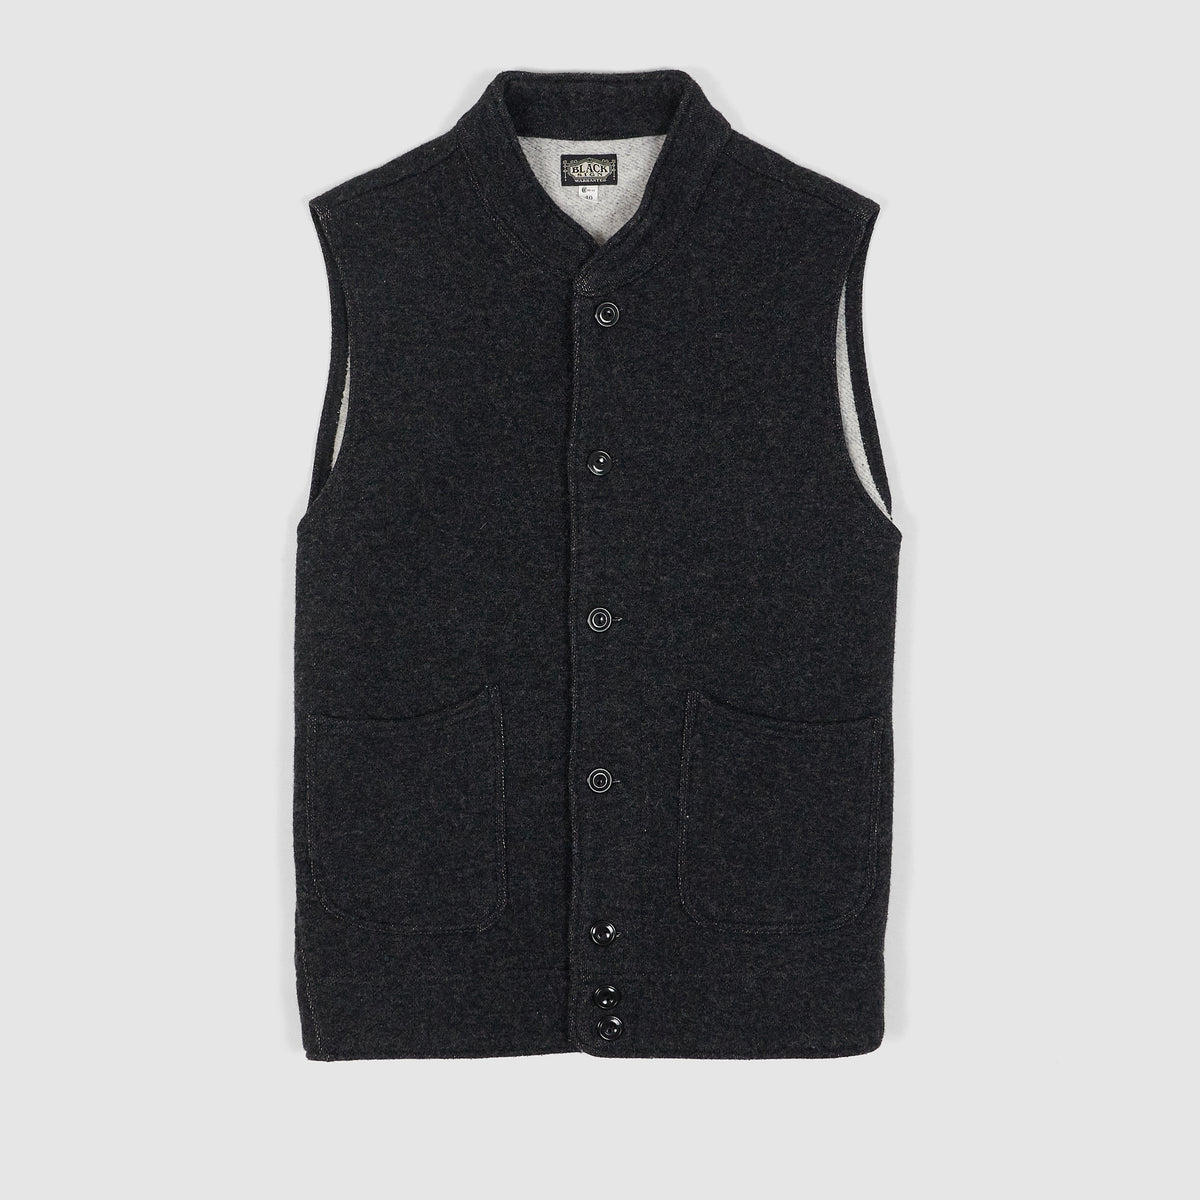 Black Sign Sweater Jersey Vest